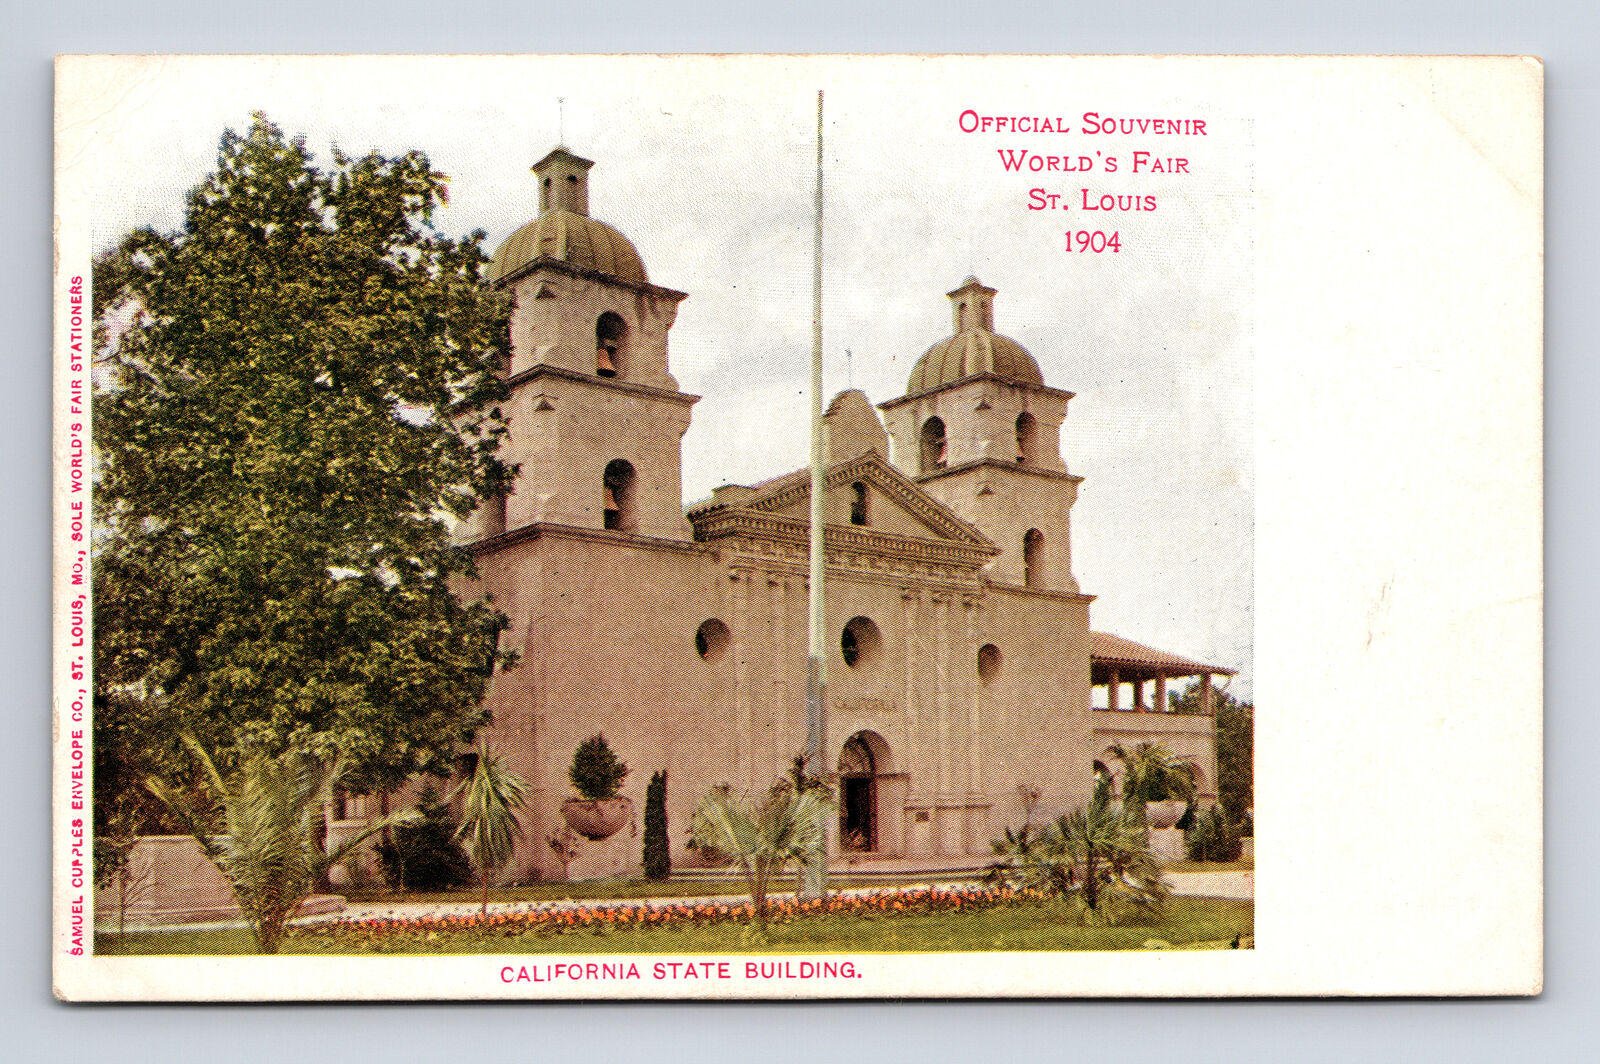 Official Souvenir World's Fair St. Louis 1904 California State Building Postcard